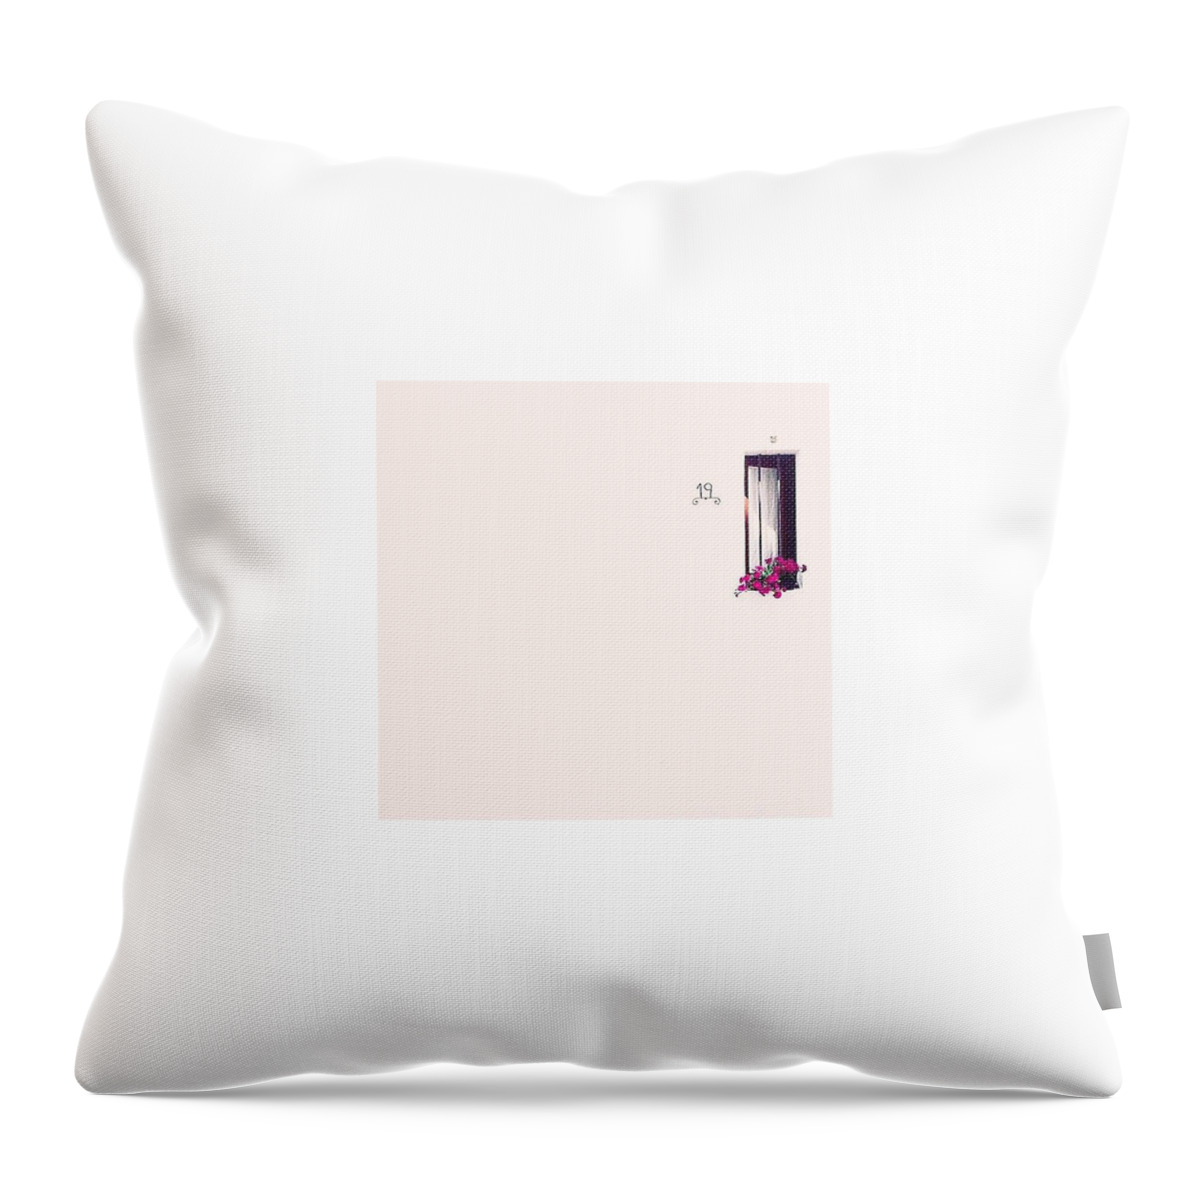 Ventana Throw Pillow featuring the photograph La finestreta by Judith Sayrach